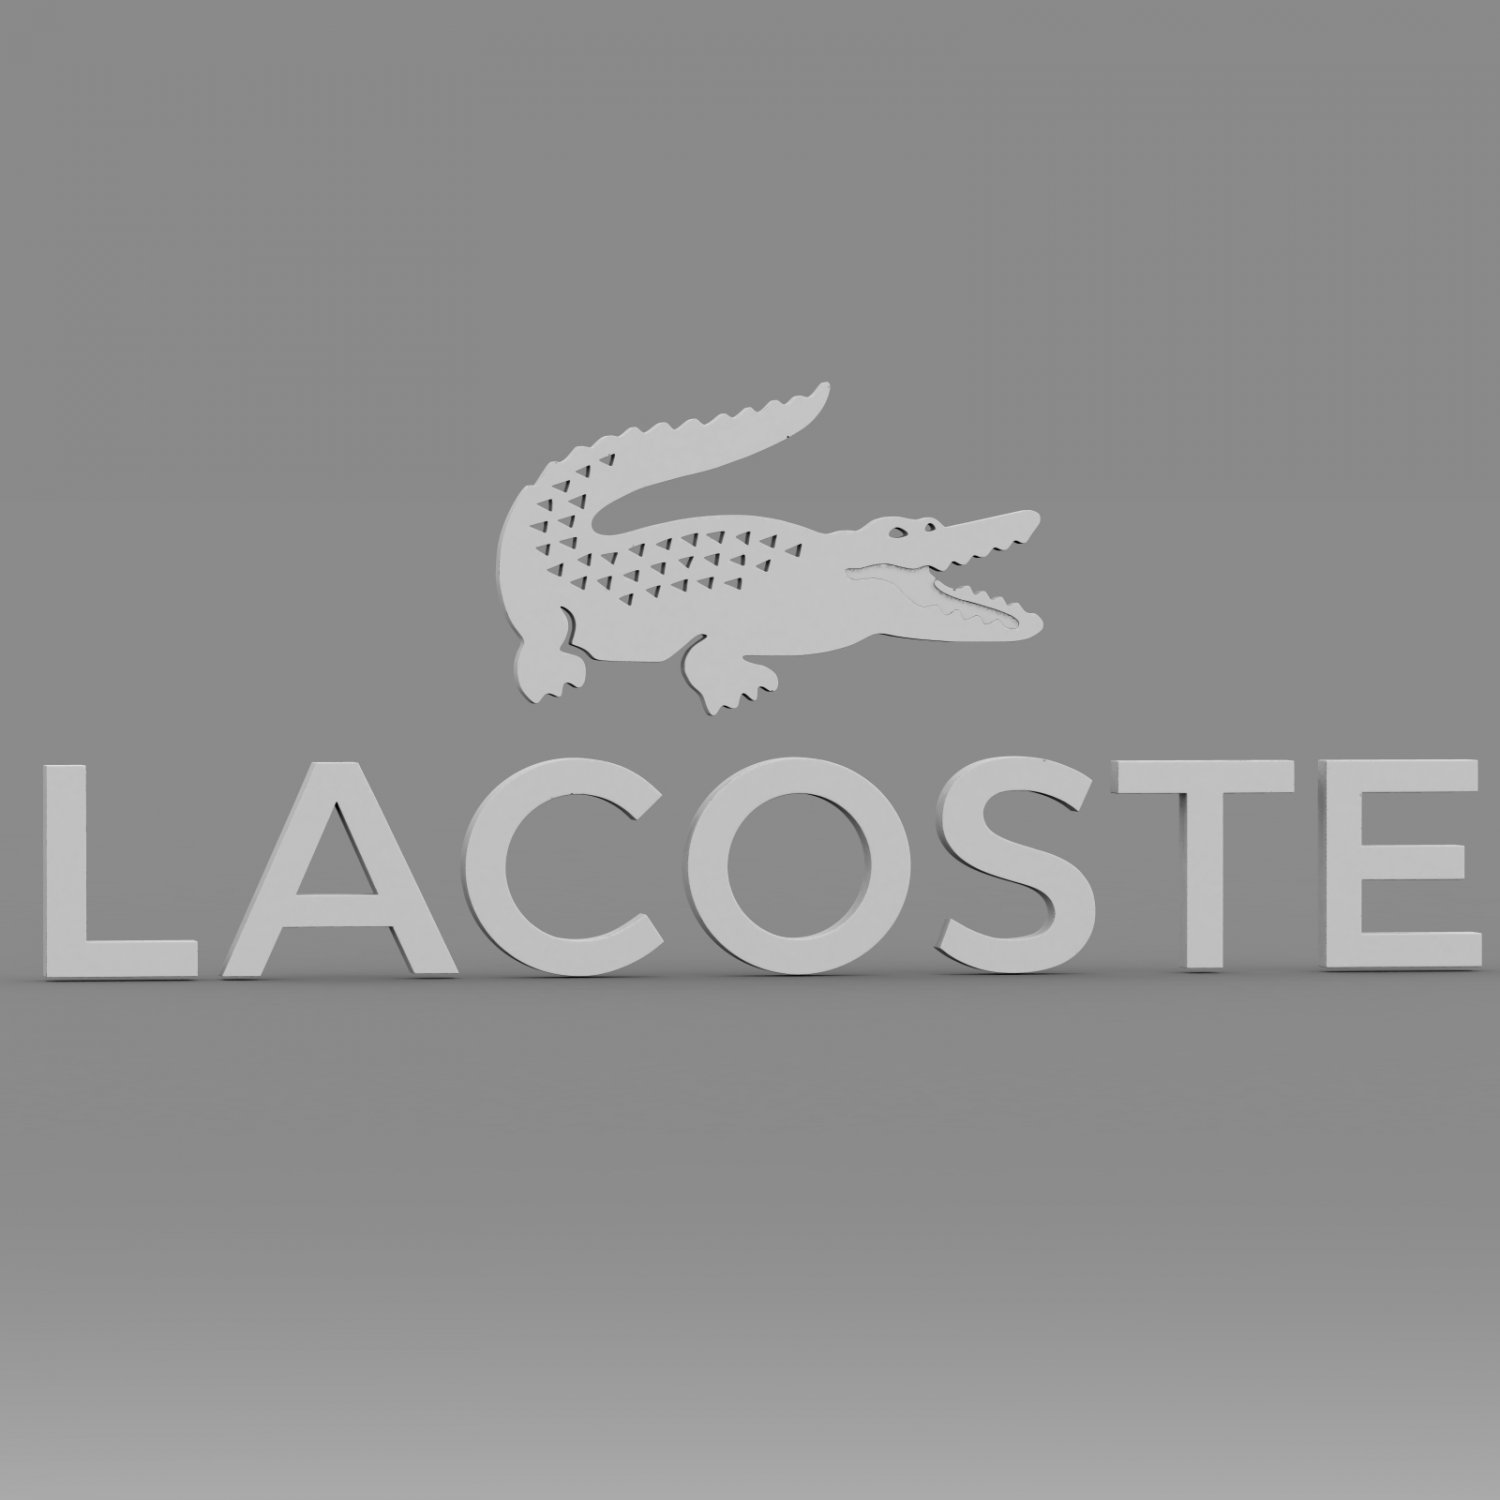 3д модели логотипов. Lacoste старый логотип.